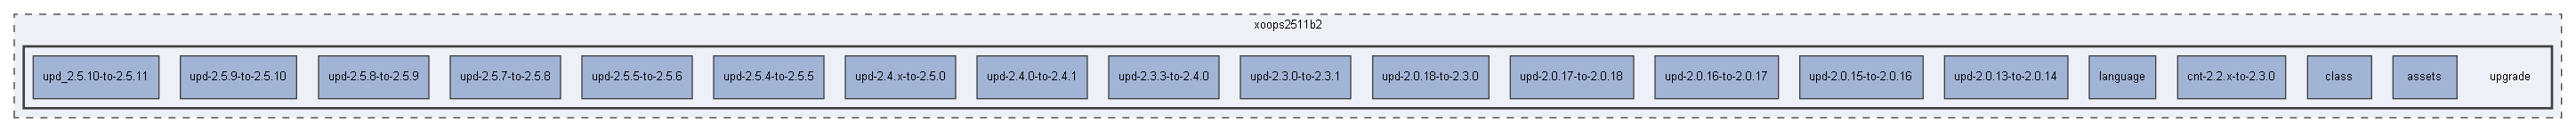 C:/xoops2511b2/upgrade